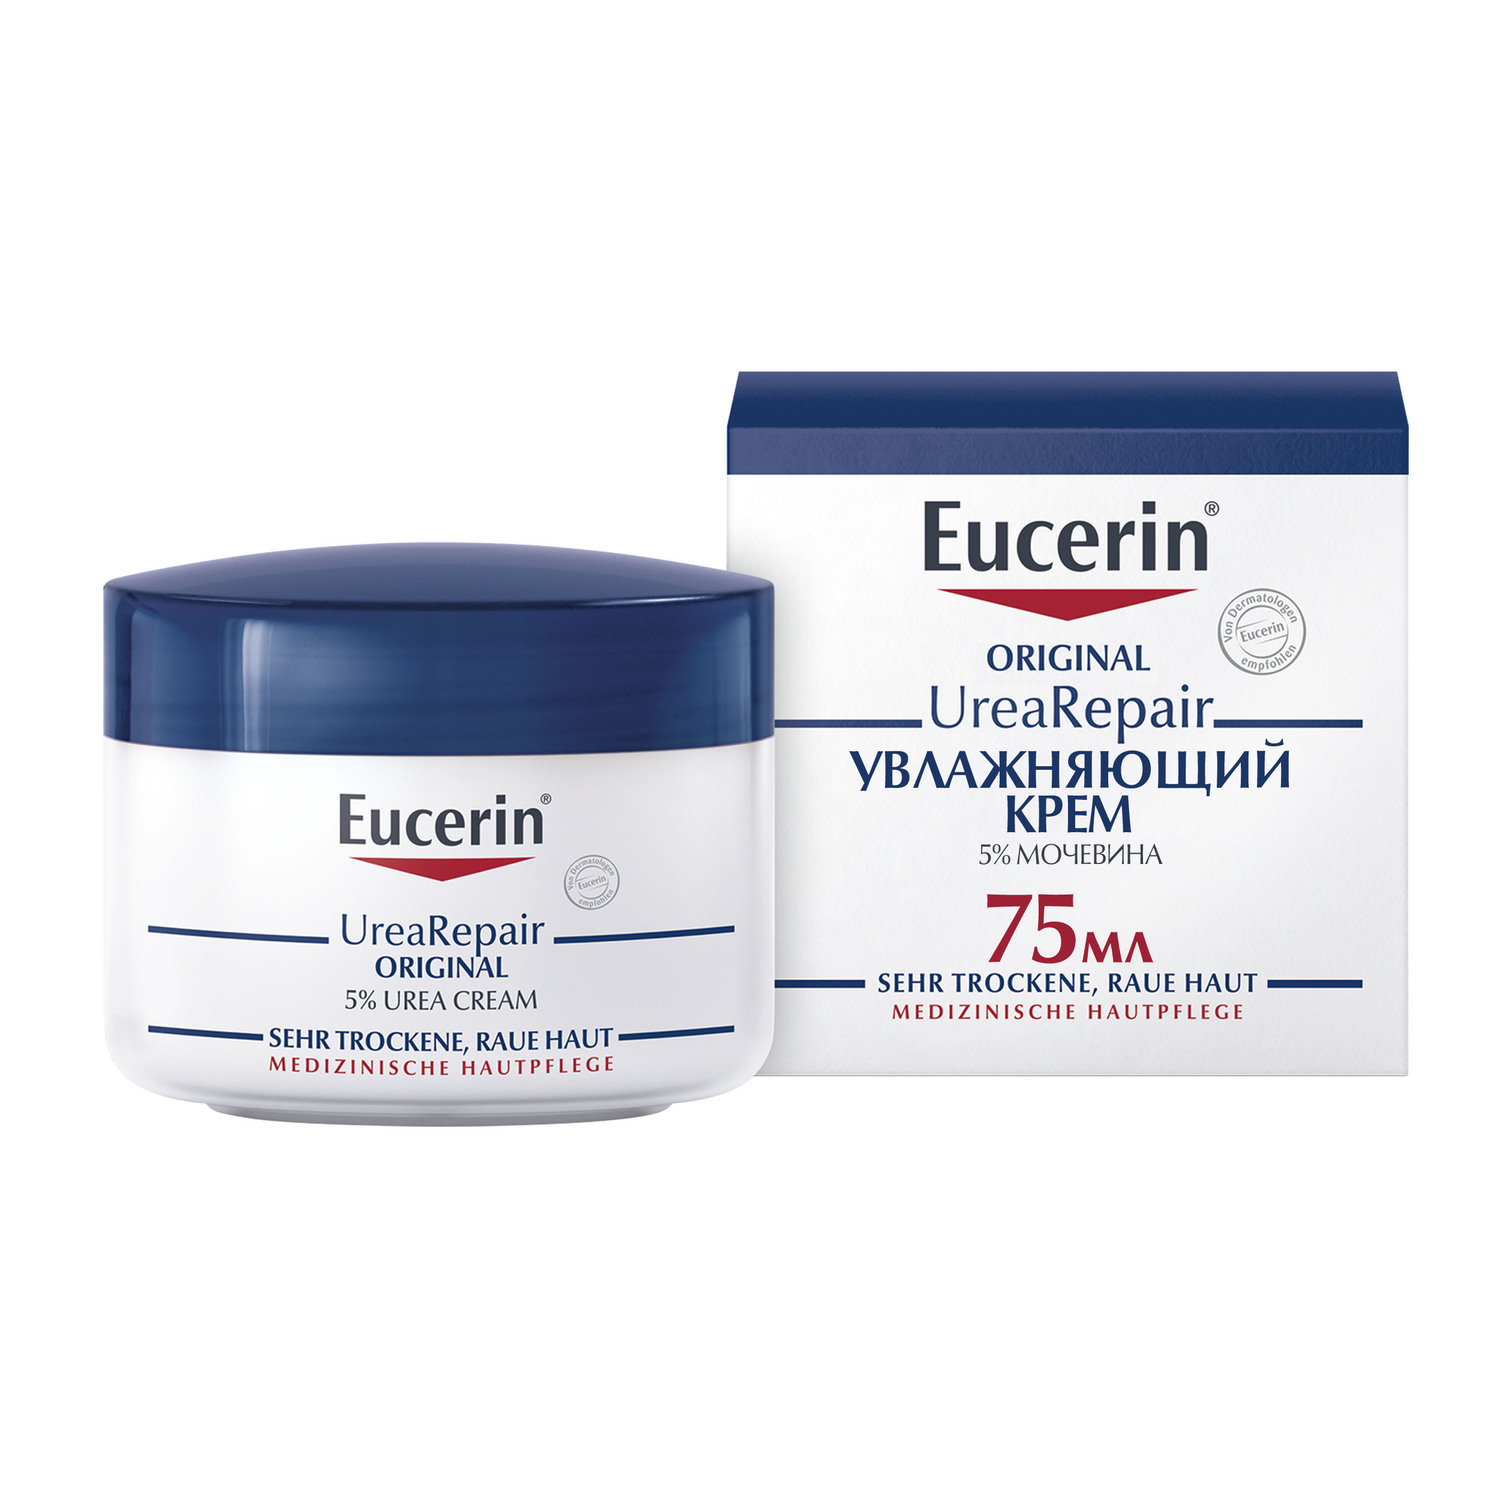 Eucerin Увлажняющий крем с 5% мочевиной, 75 мл (Eucerin, UreaRepair) eucerin увлажняющий крем для рук с 5% мочевиной 75 мл eucerin urearepair